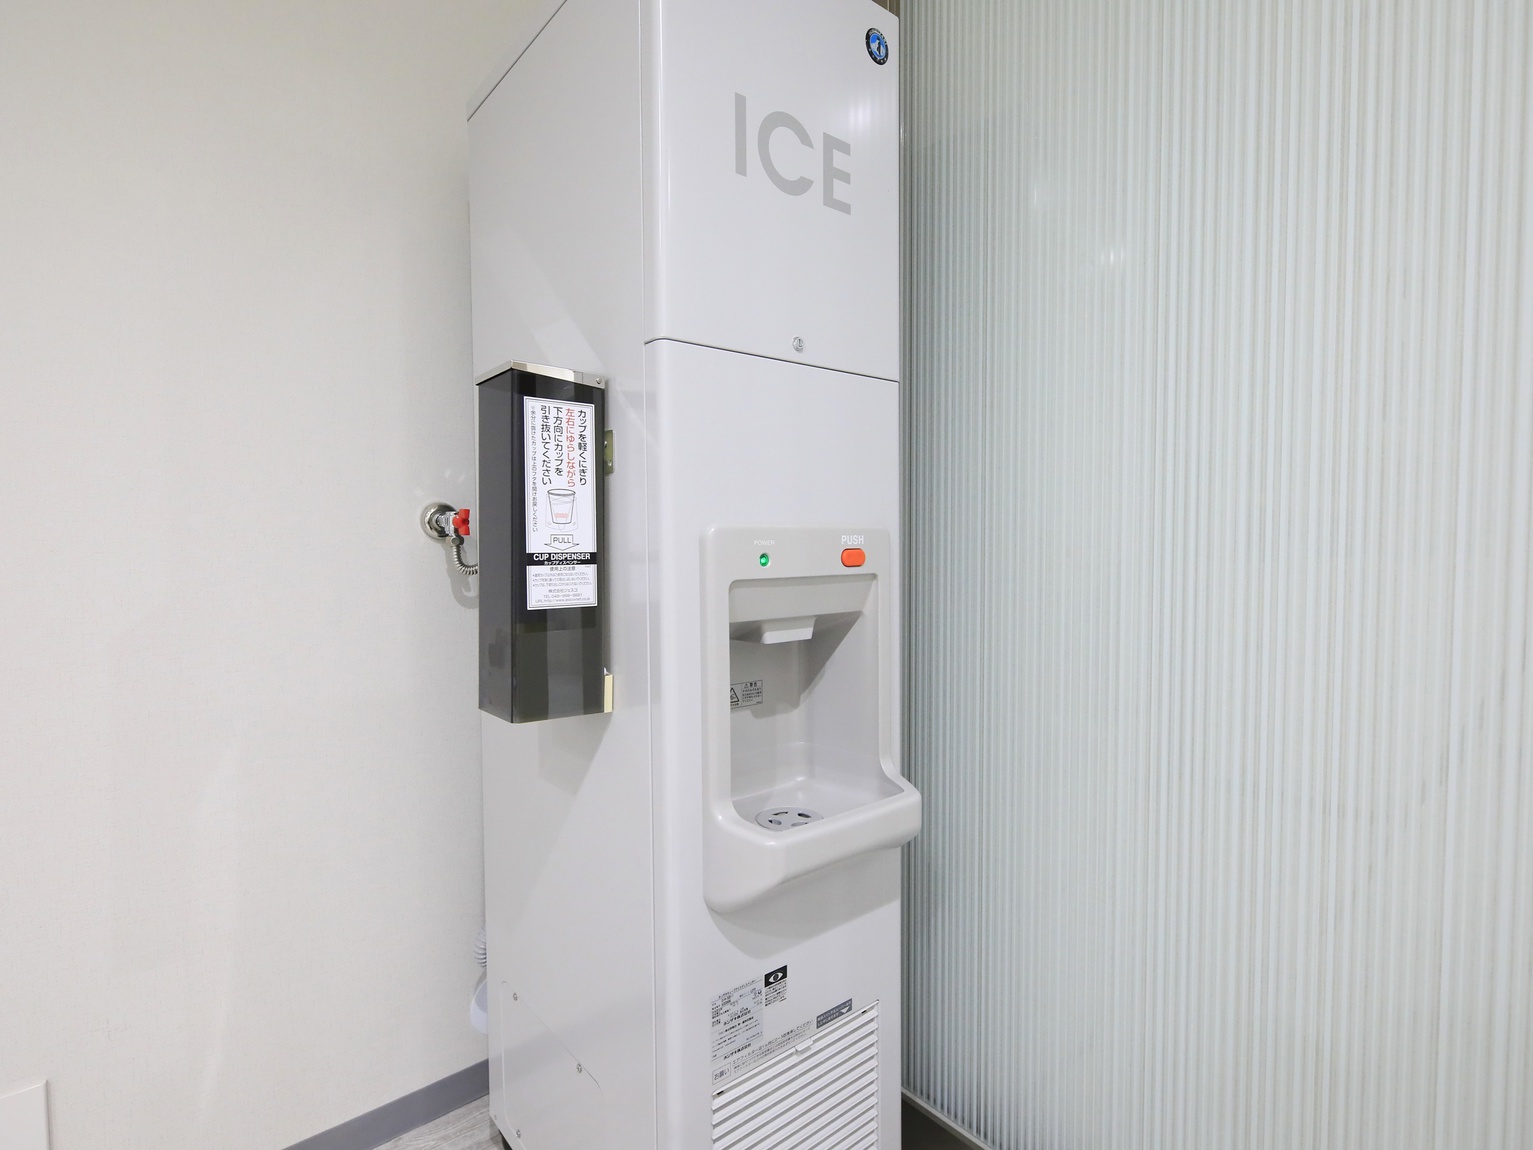 製氷機 / Ice machine